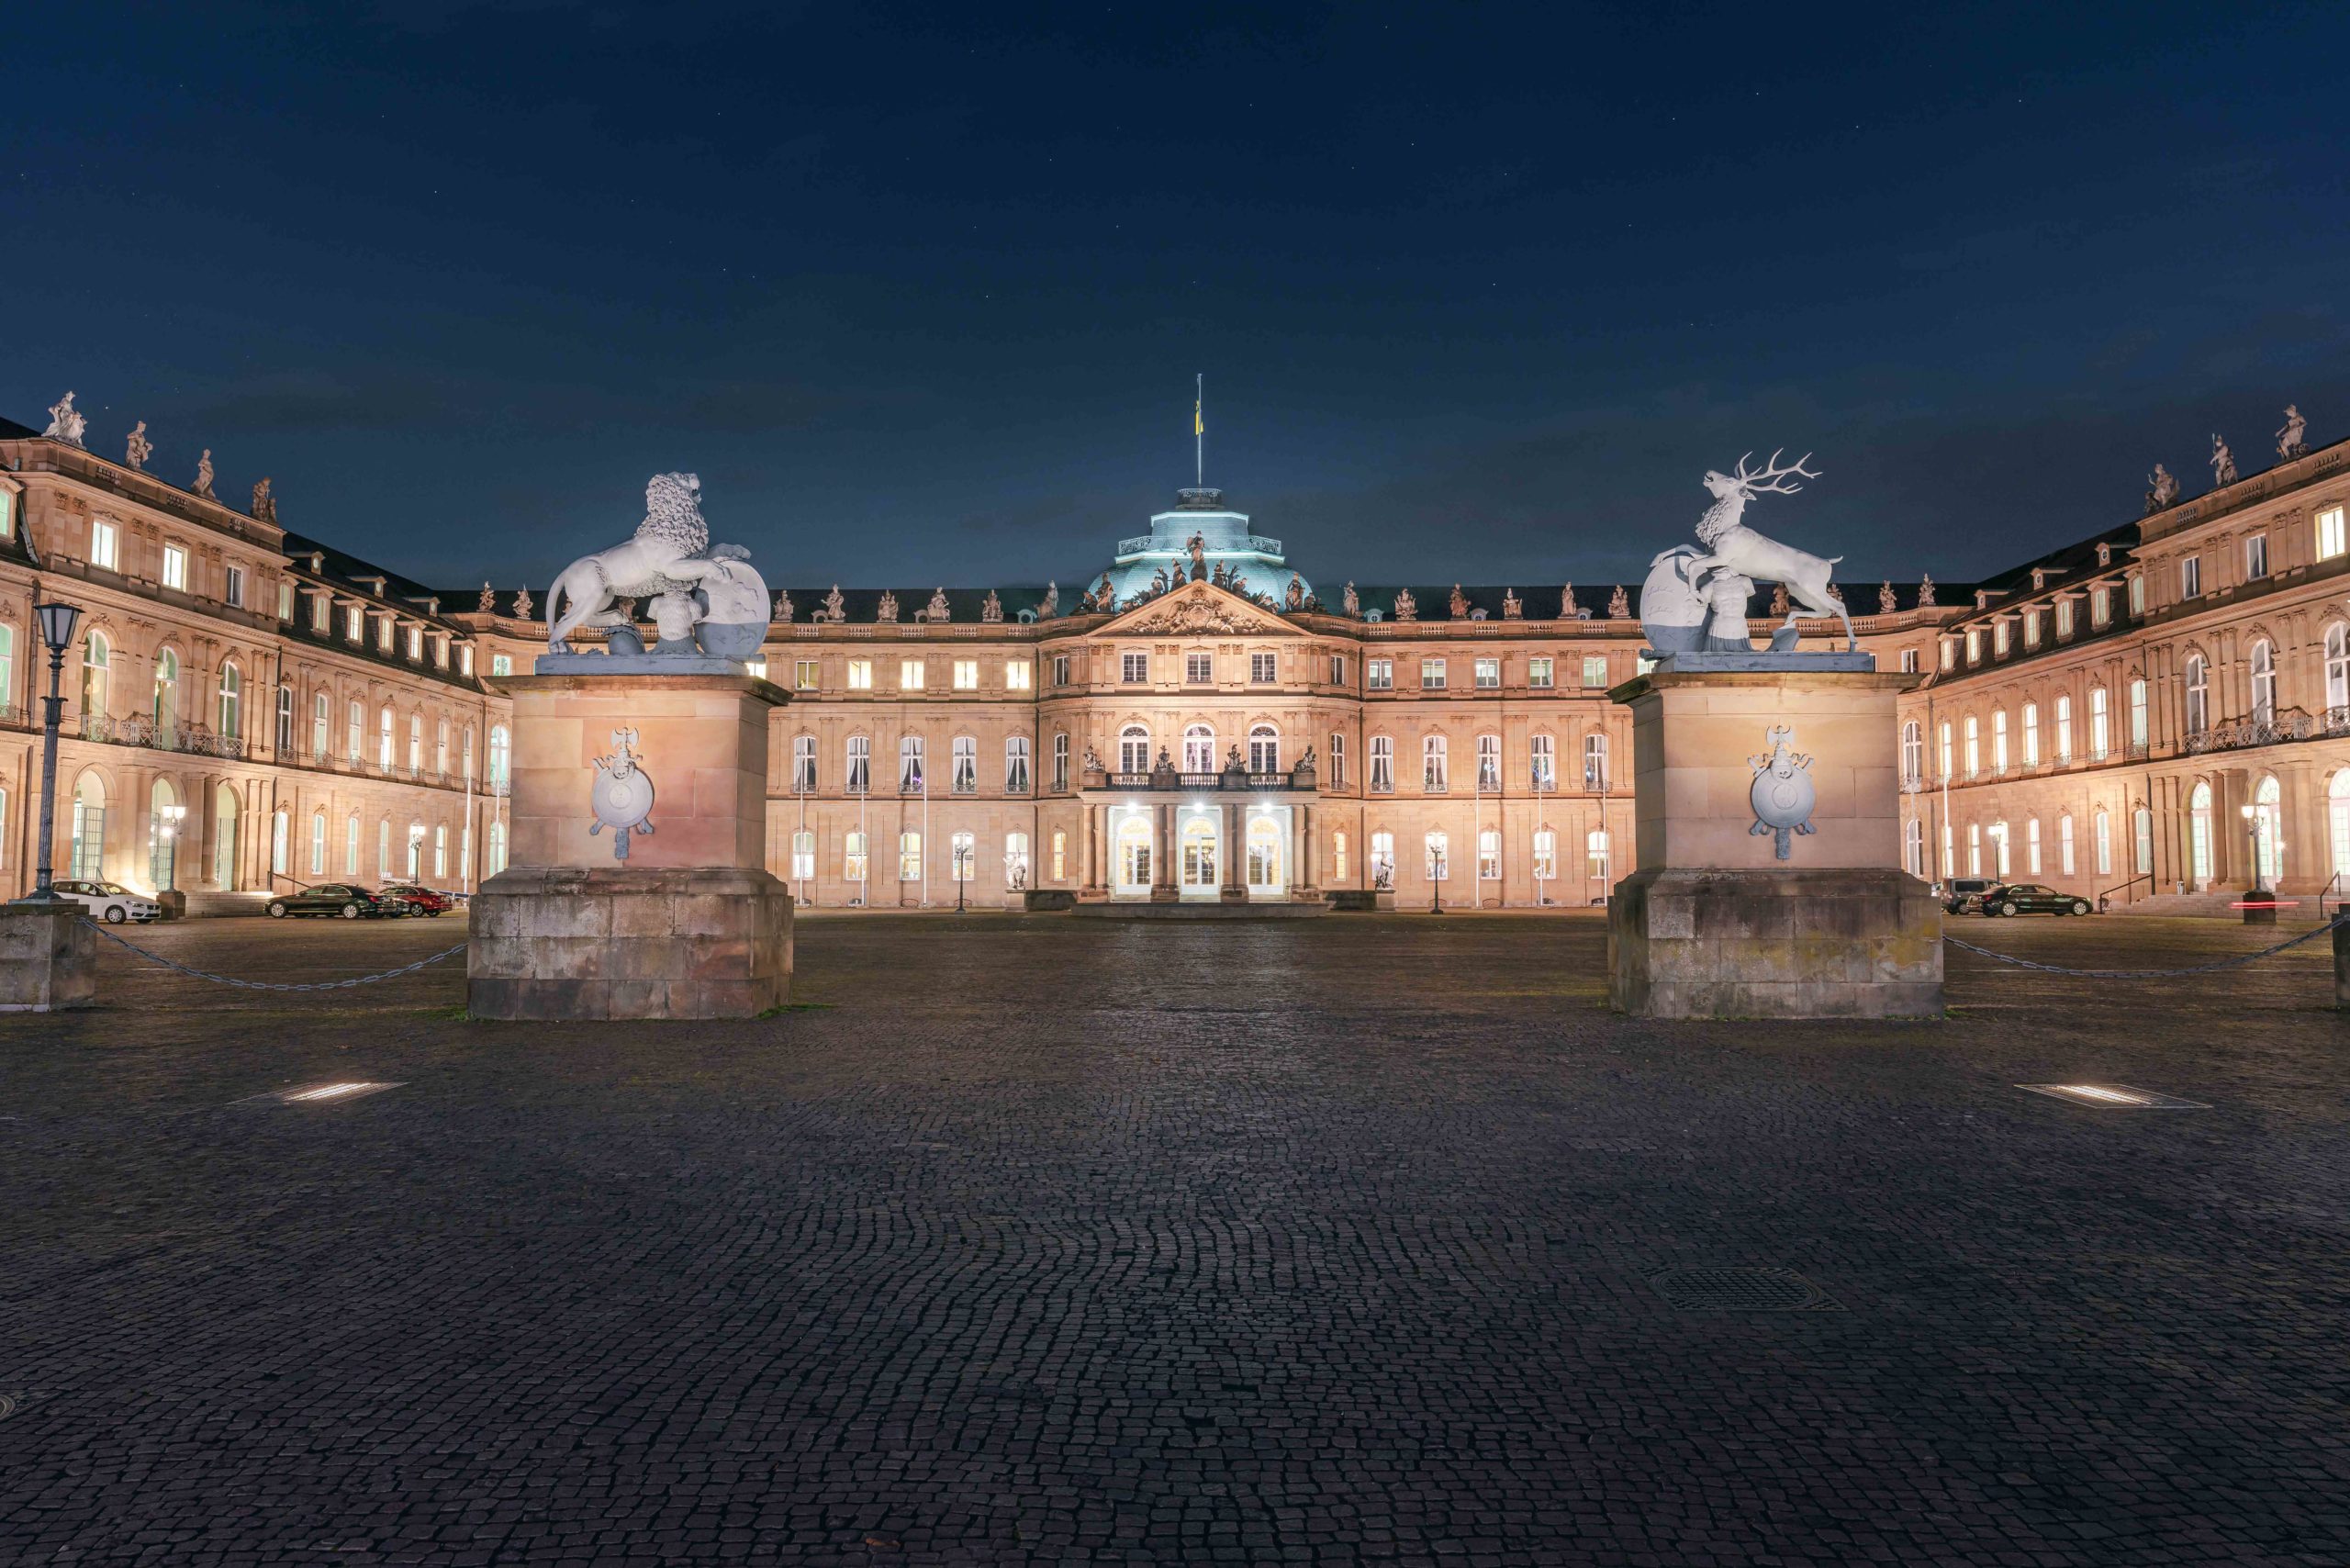 Stuttgart Neues Schloss by diegograndi via Envato Elements